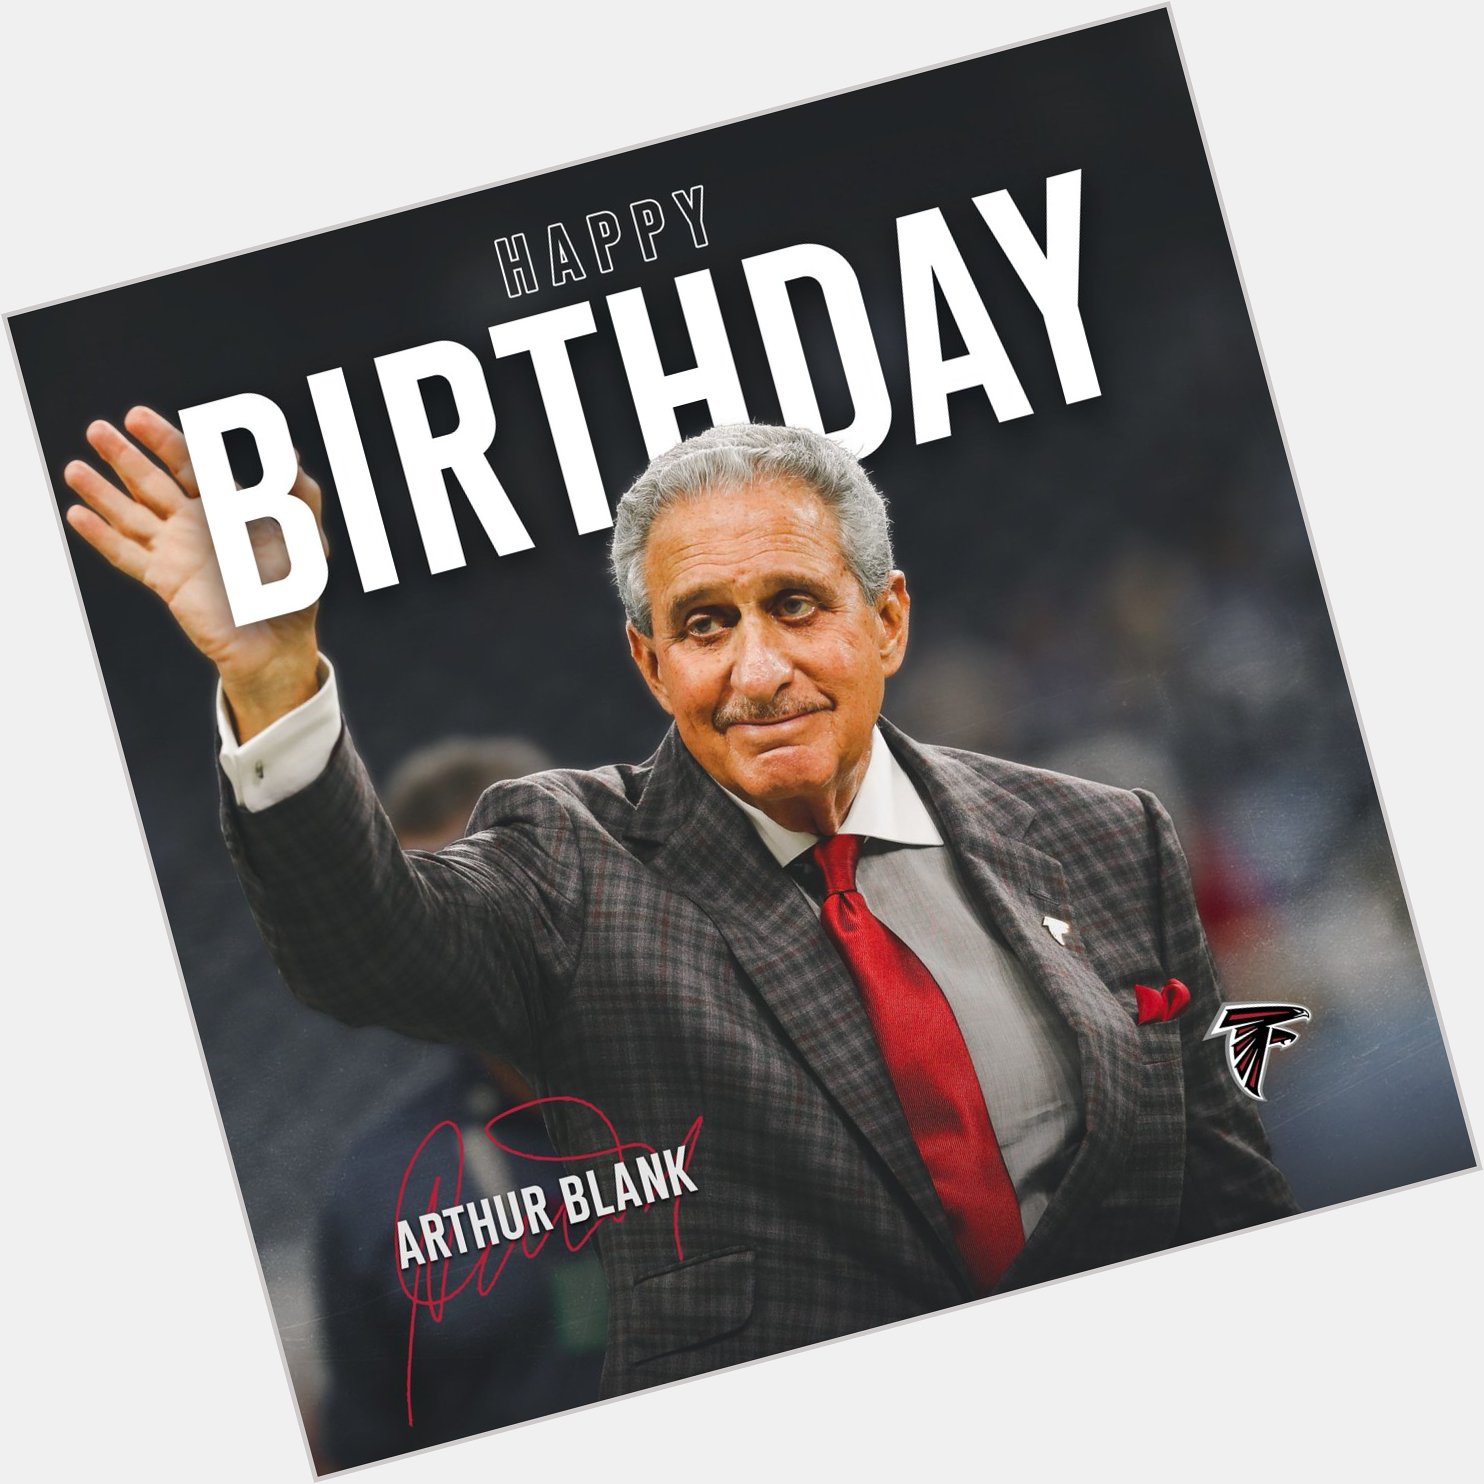 AtlantaFalcons: Happy birthday to the best owner around, Arthur Blank!

to show him some birthday love! 